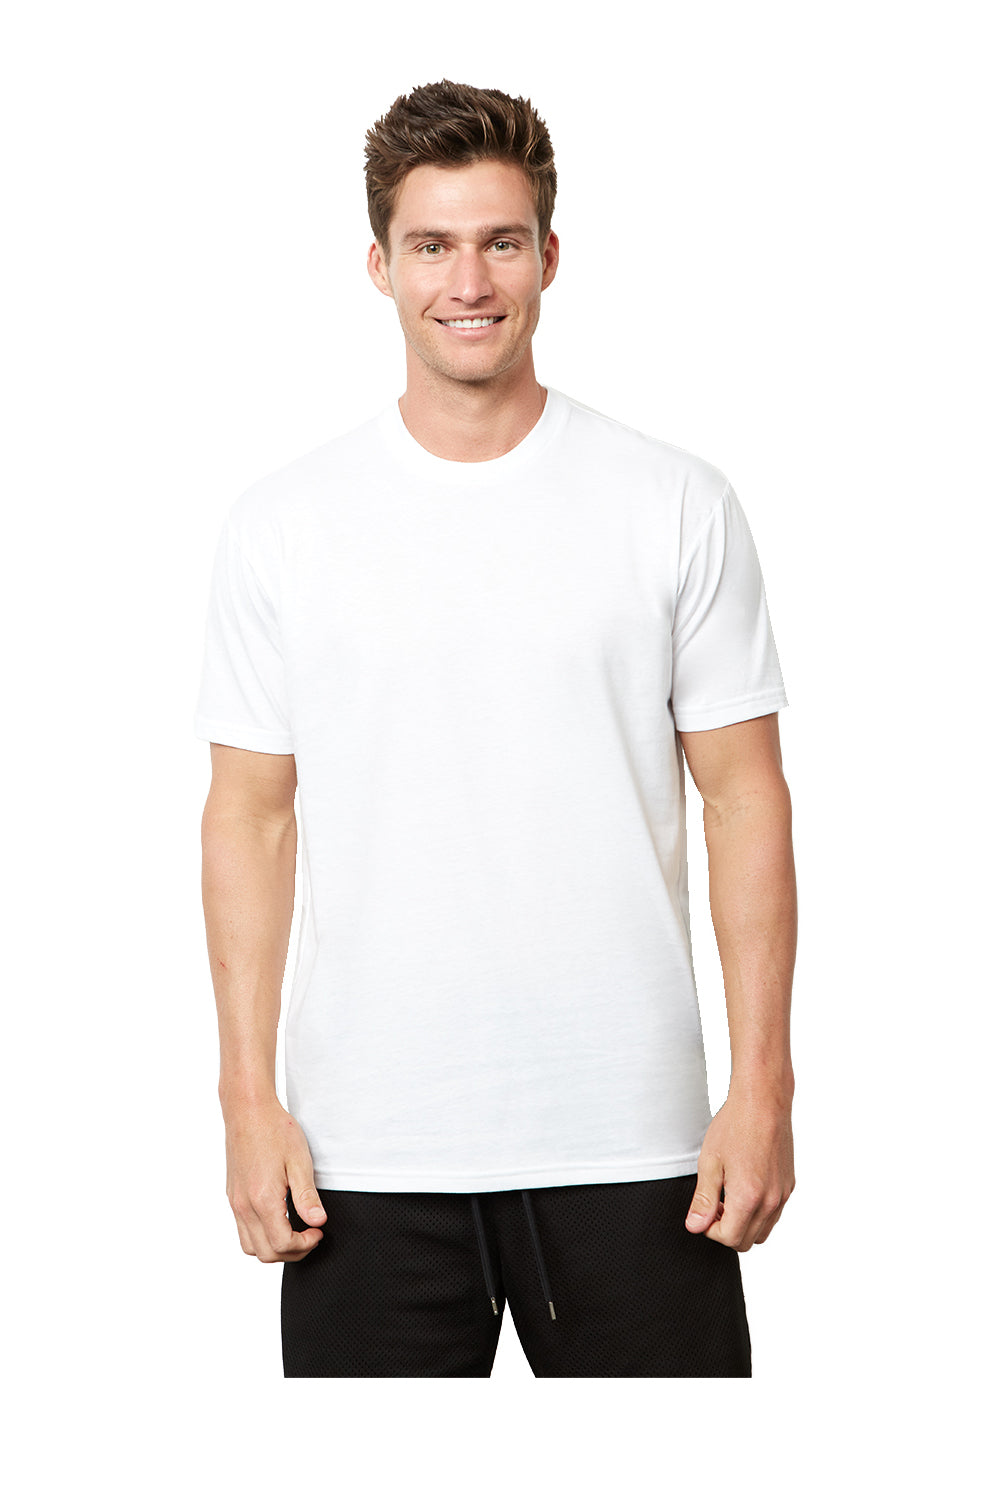 Next Level 4210 Mens Eco Performance Short Sleeve Crewneck T-Shirt White Front